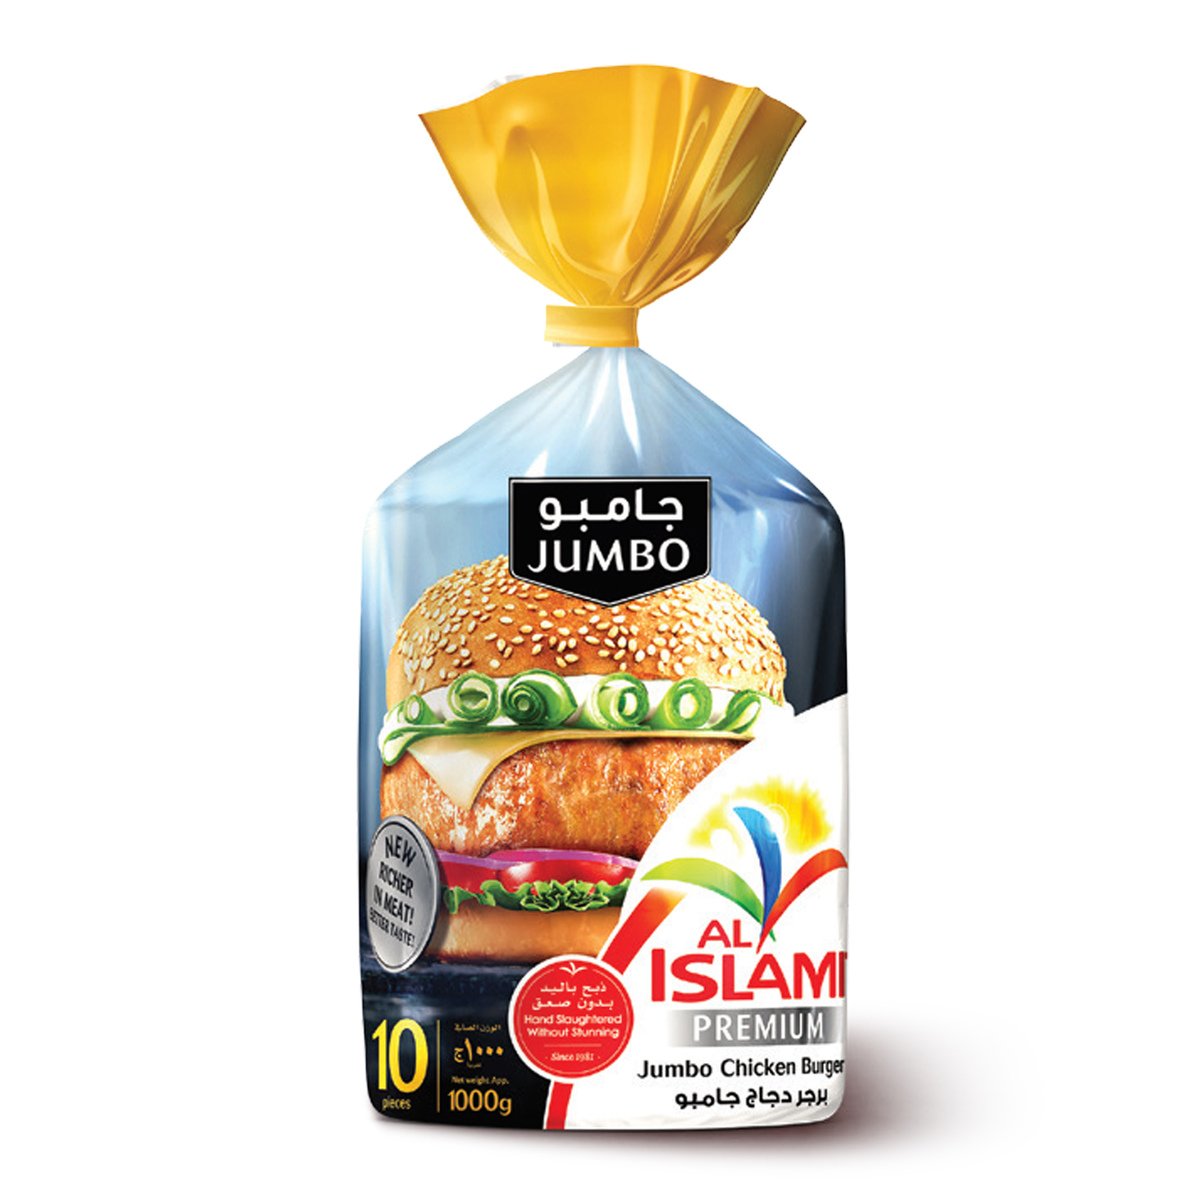 Al Islami Premium Jumbo Chicken Burger 1 kg